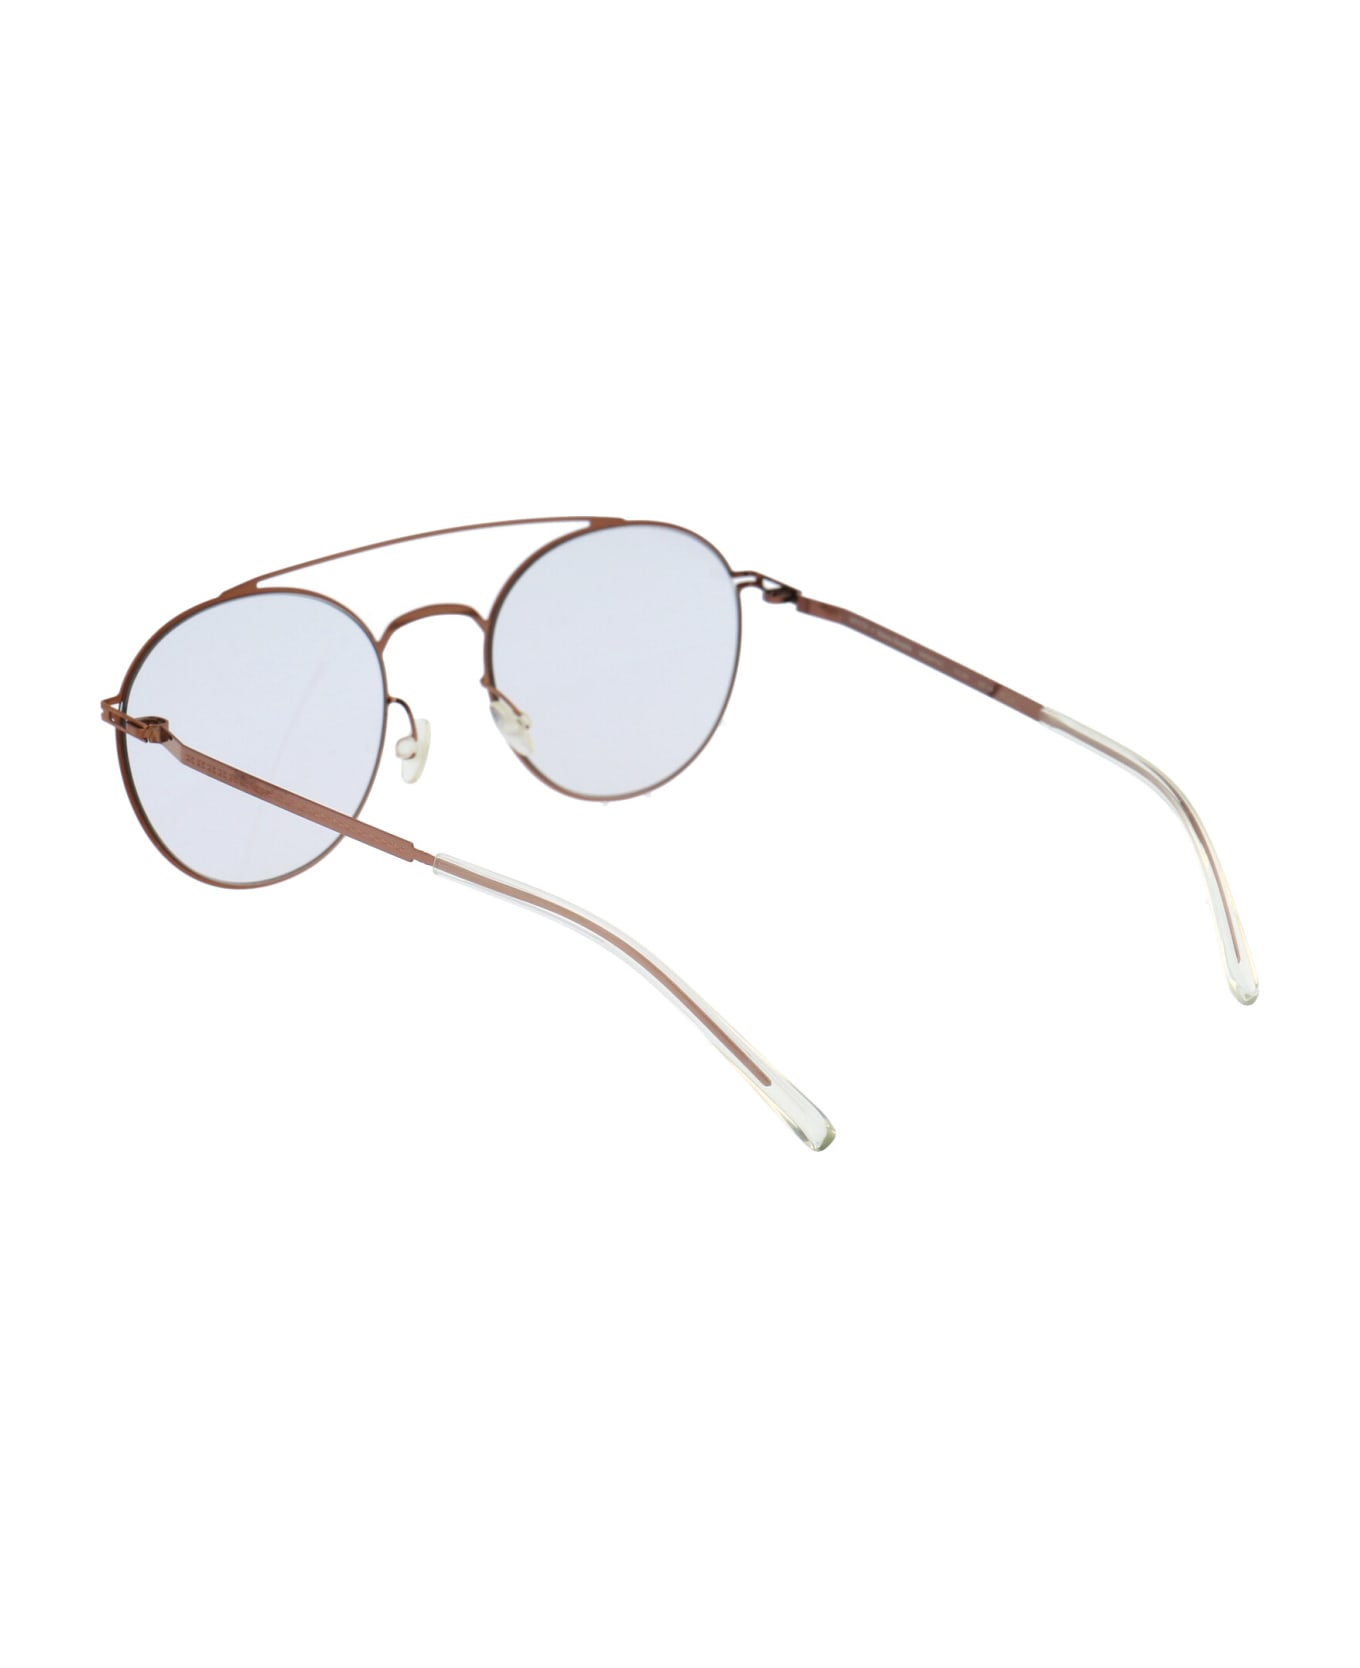 Mykita Mmcraft007 Sunglasses - 252 Shiny Copper | Gloomy Grey